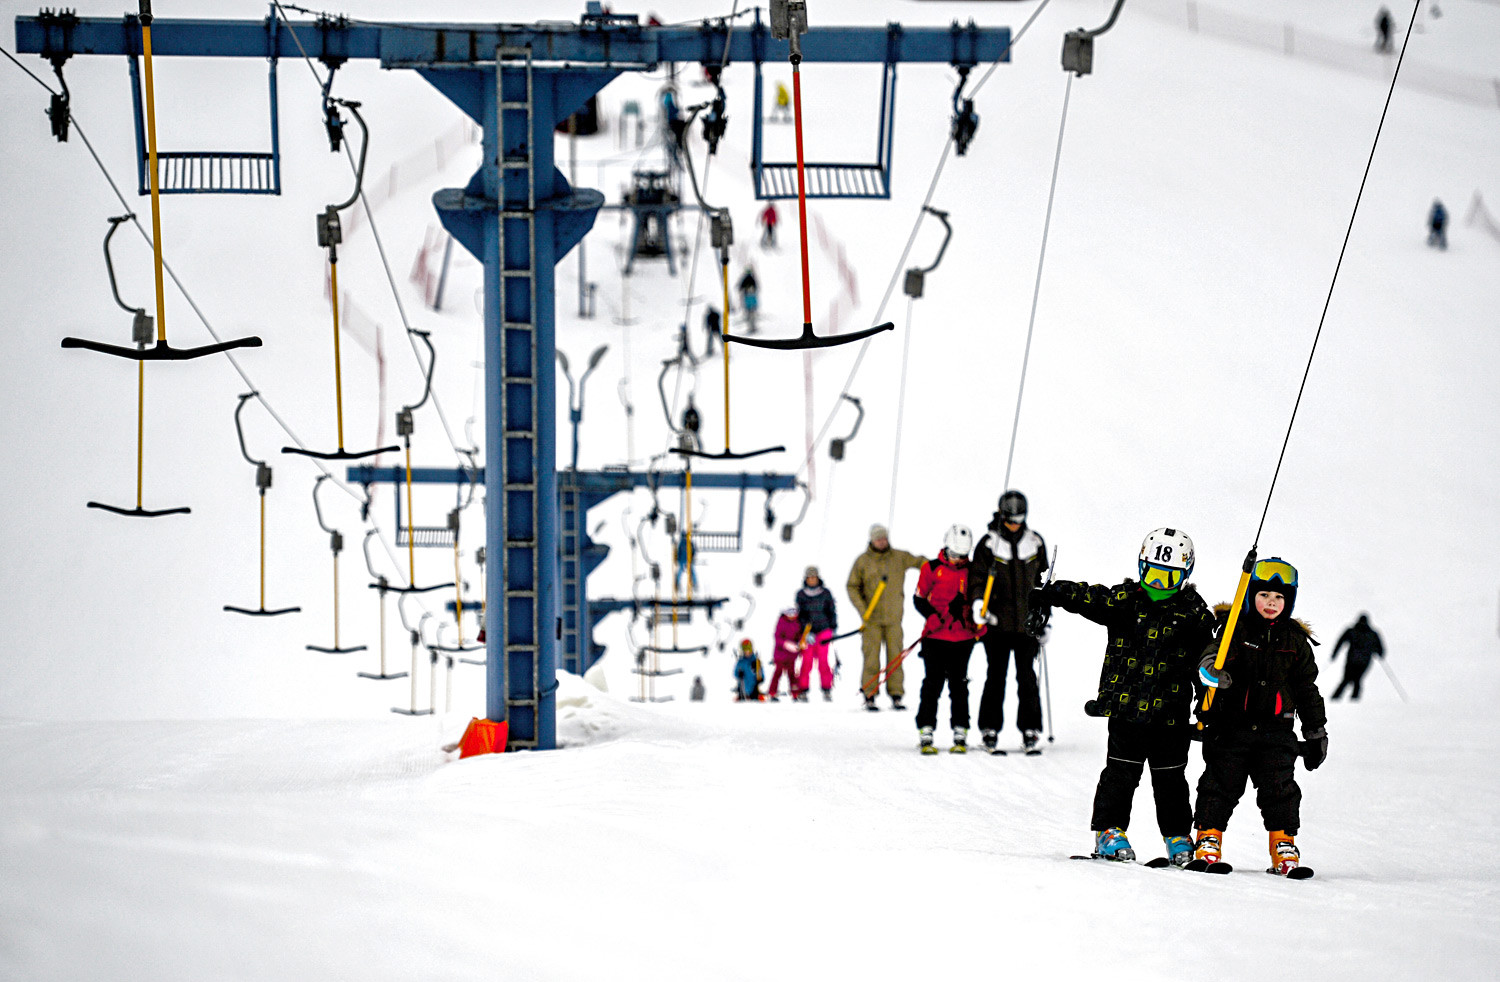 Children use a ski lift in Volen Sports Park (Yahroma) near Moscow.